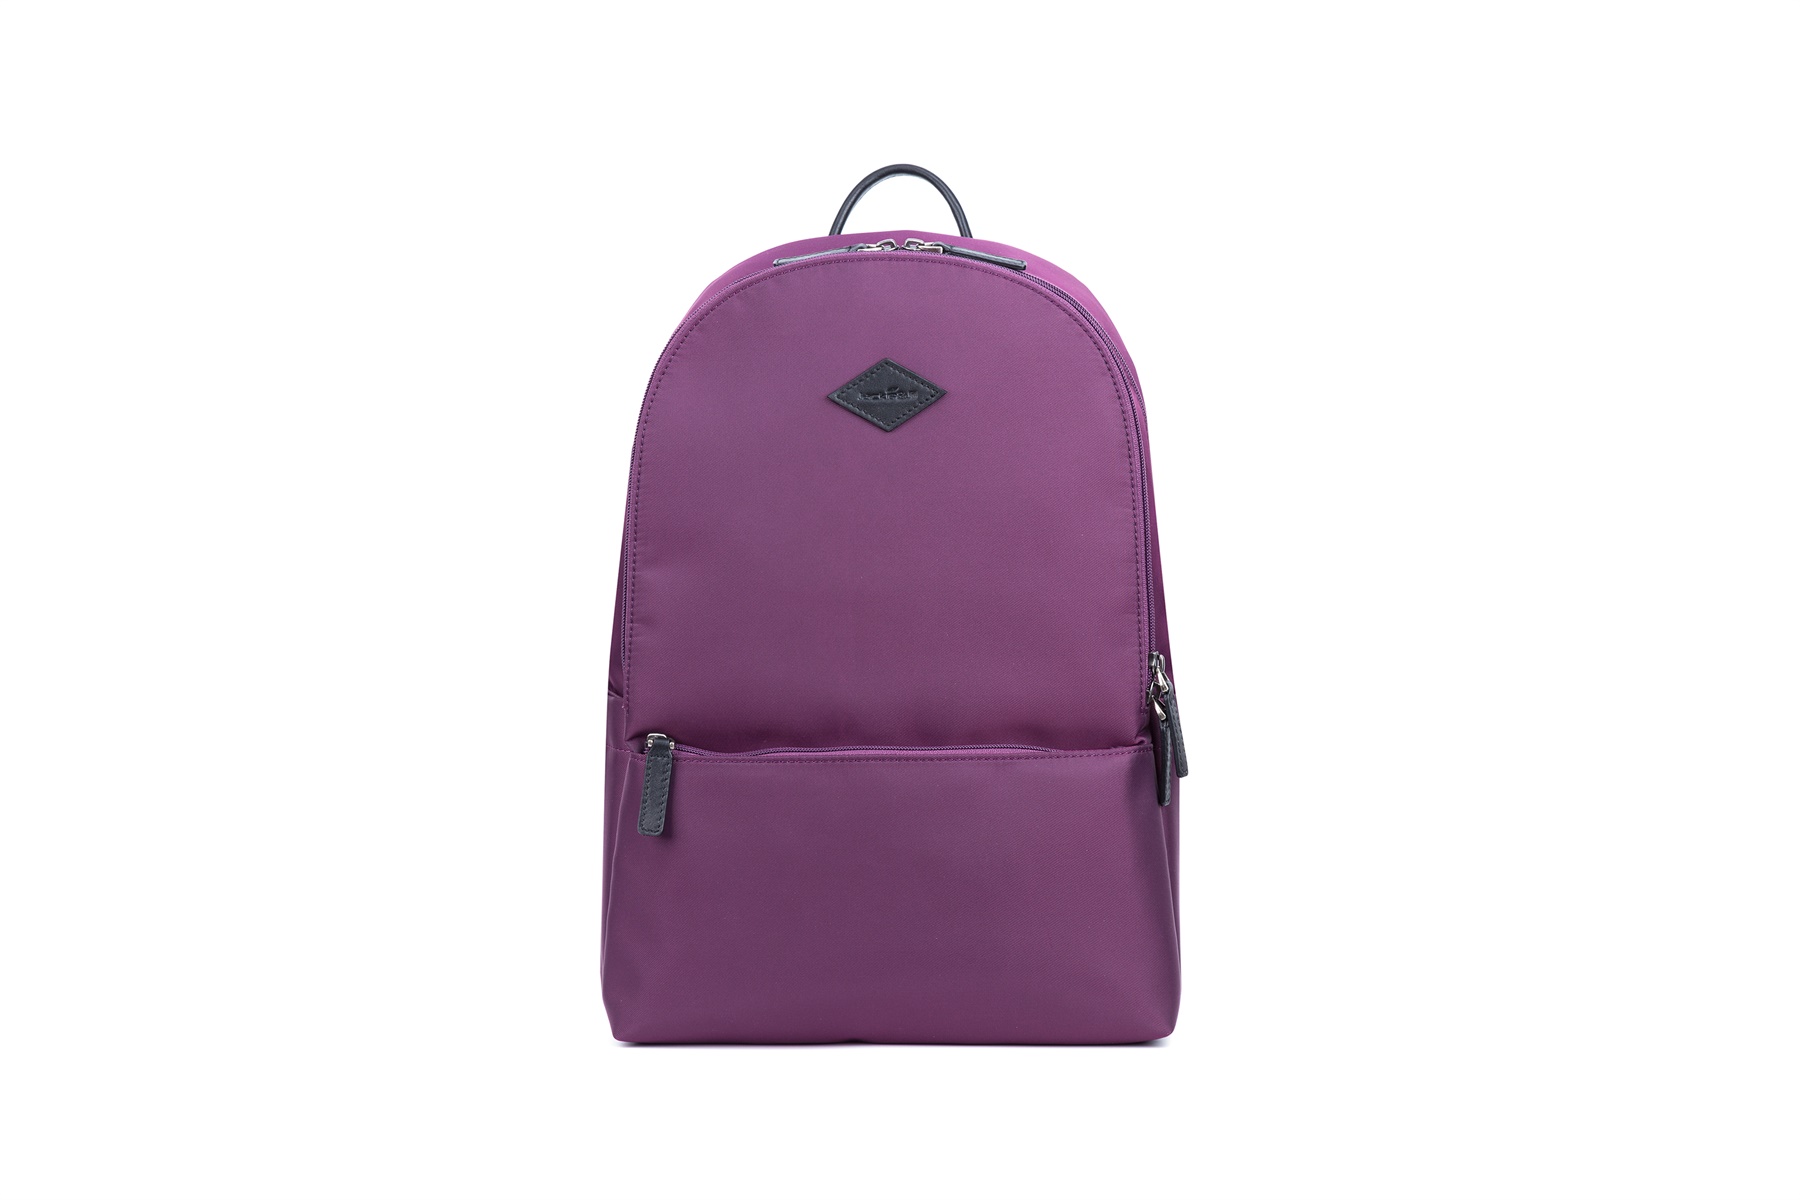 GF bags-Professional Stylish Backpacks Big Backpack Bags Manufacture